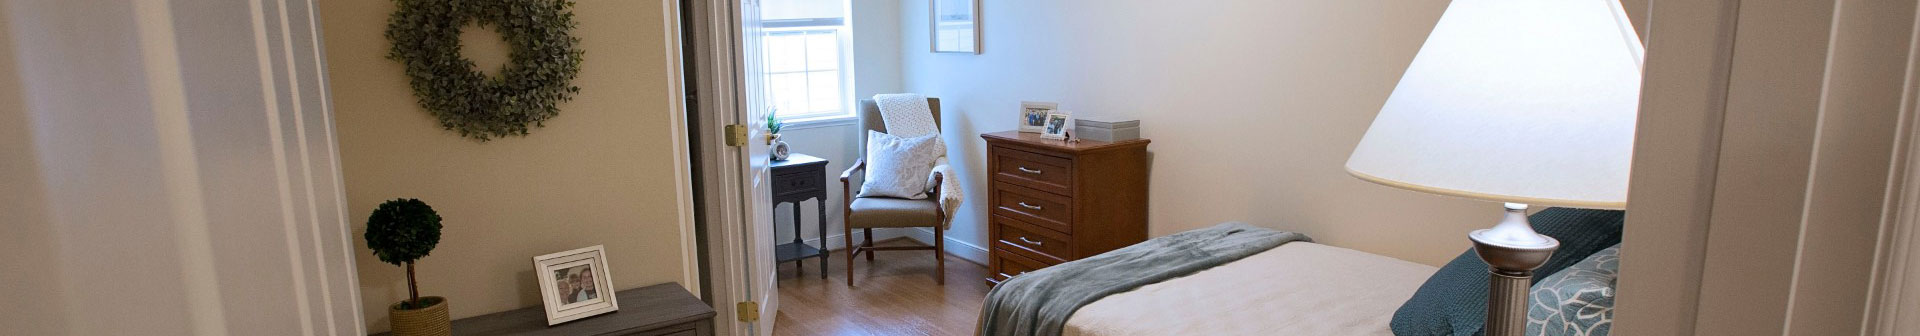 Senior living suite single bedroom with closet